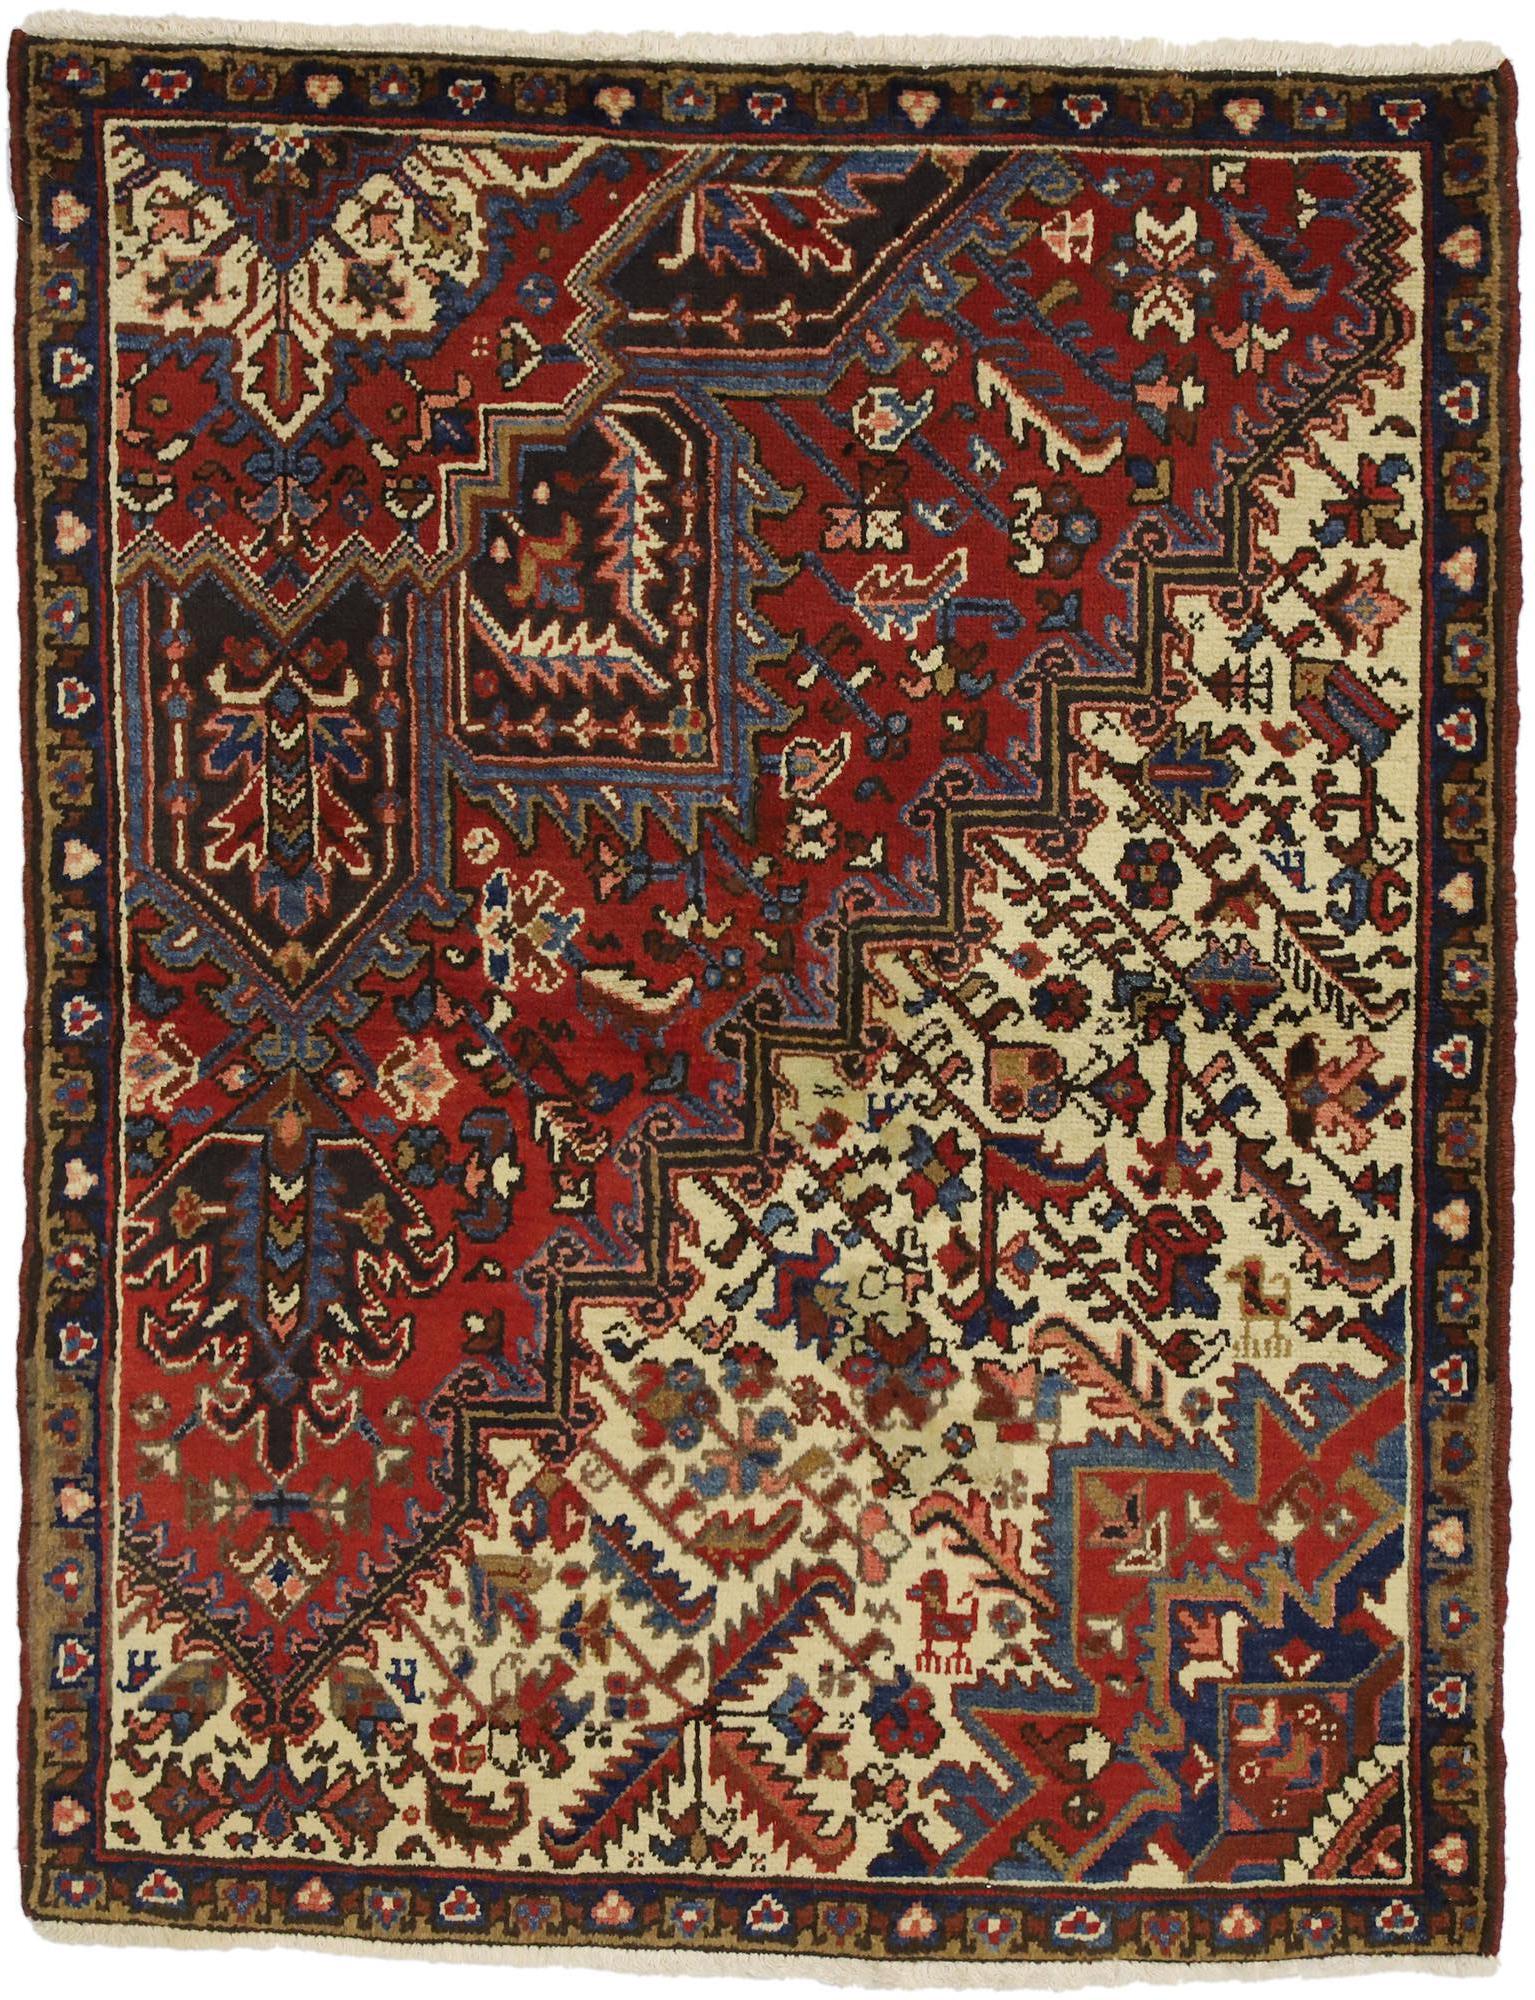 Tapis persan Heriz vintage avec style moderne traditionnel, tapis Wagireh